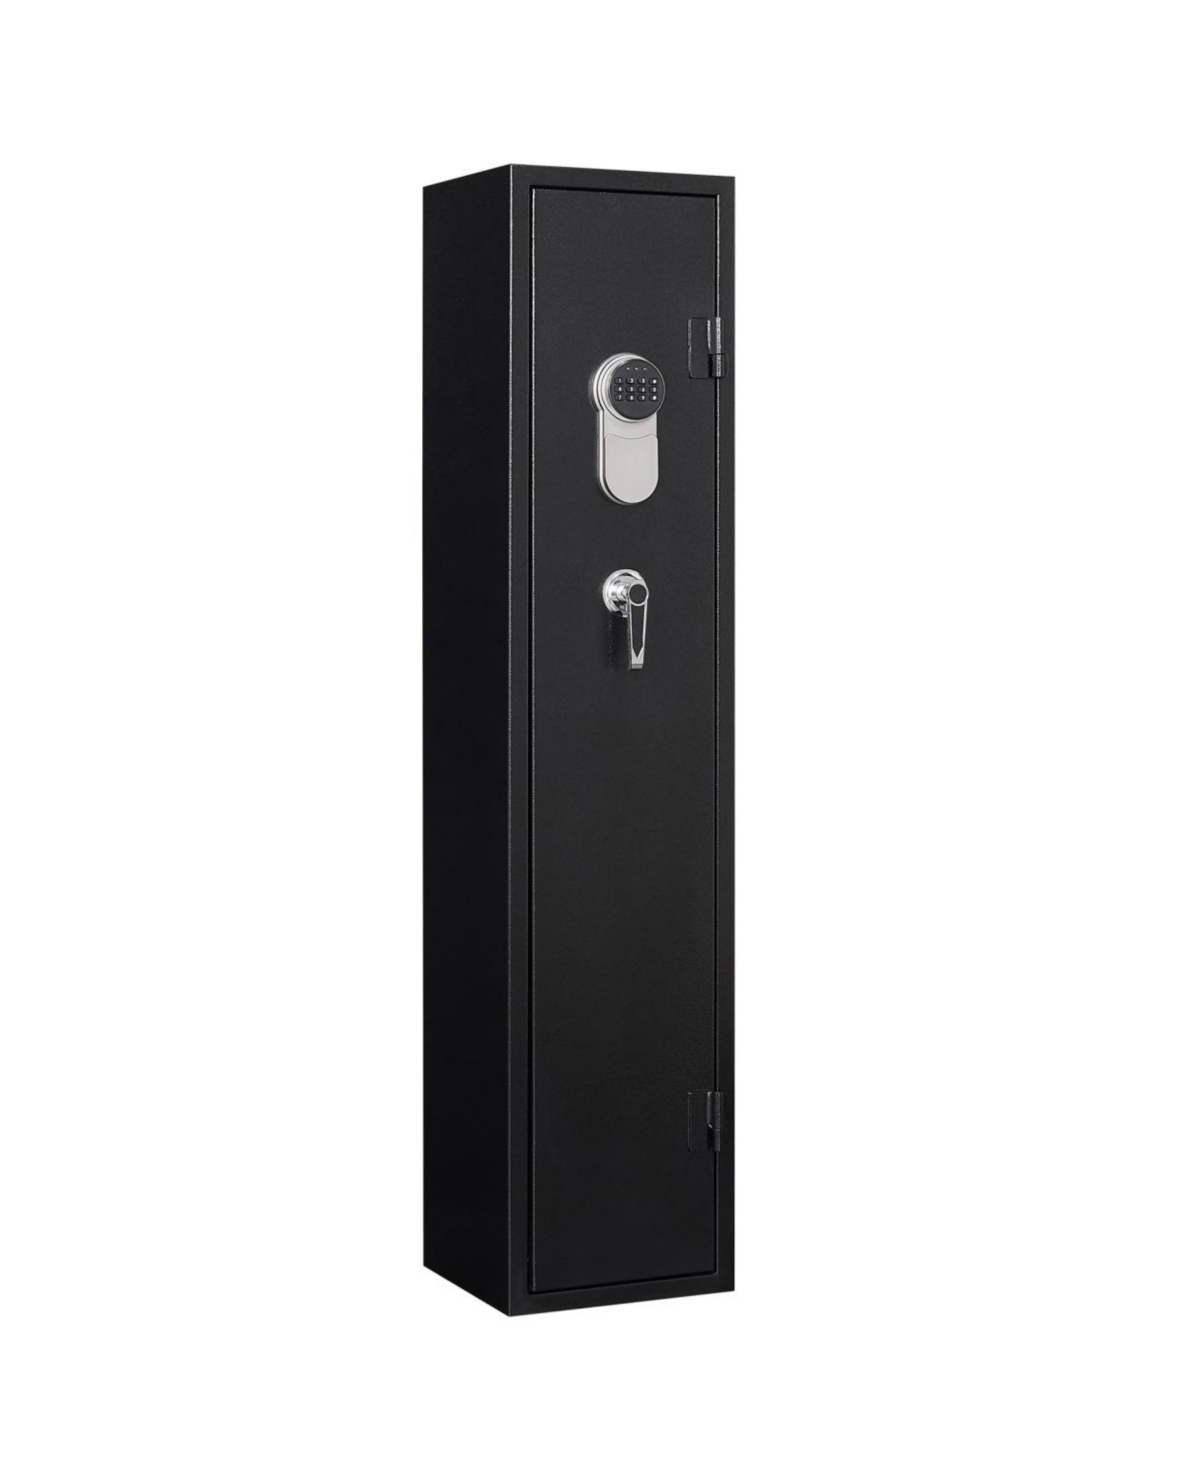 Digital Keypad Gun Safe Quick Access Electronic Storage Steel Security Cabinet - Black